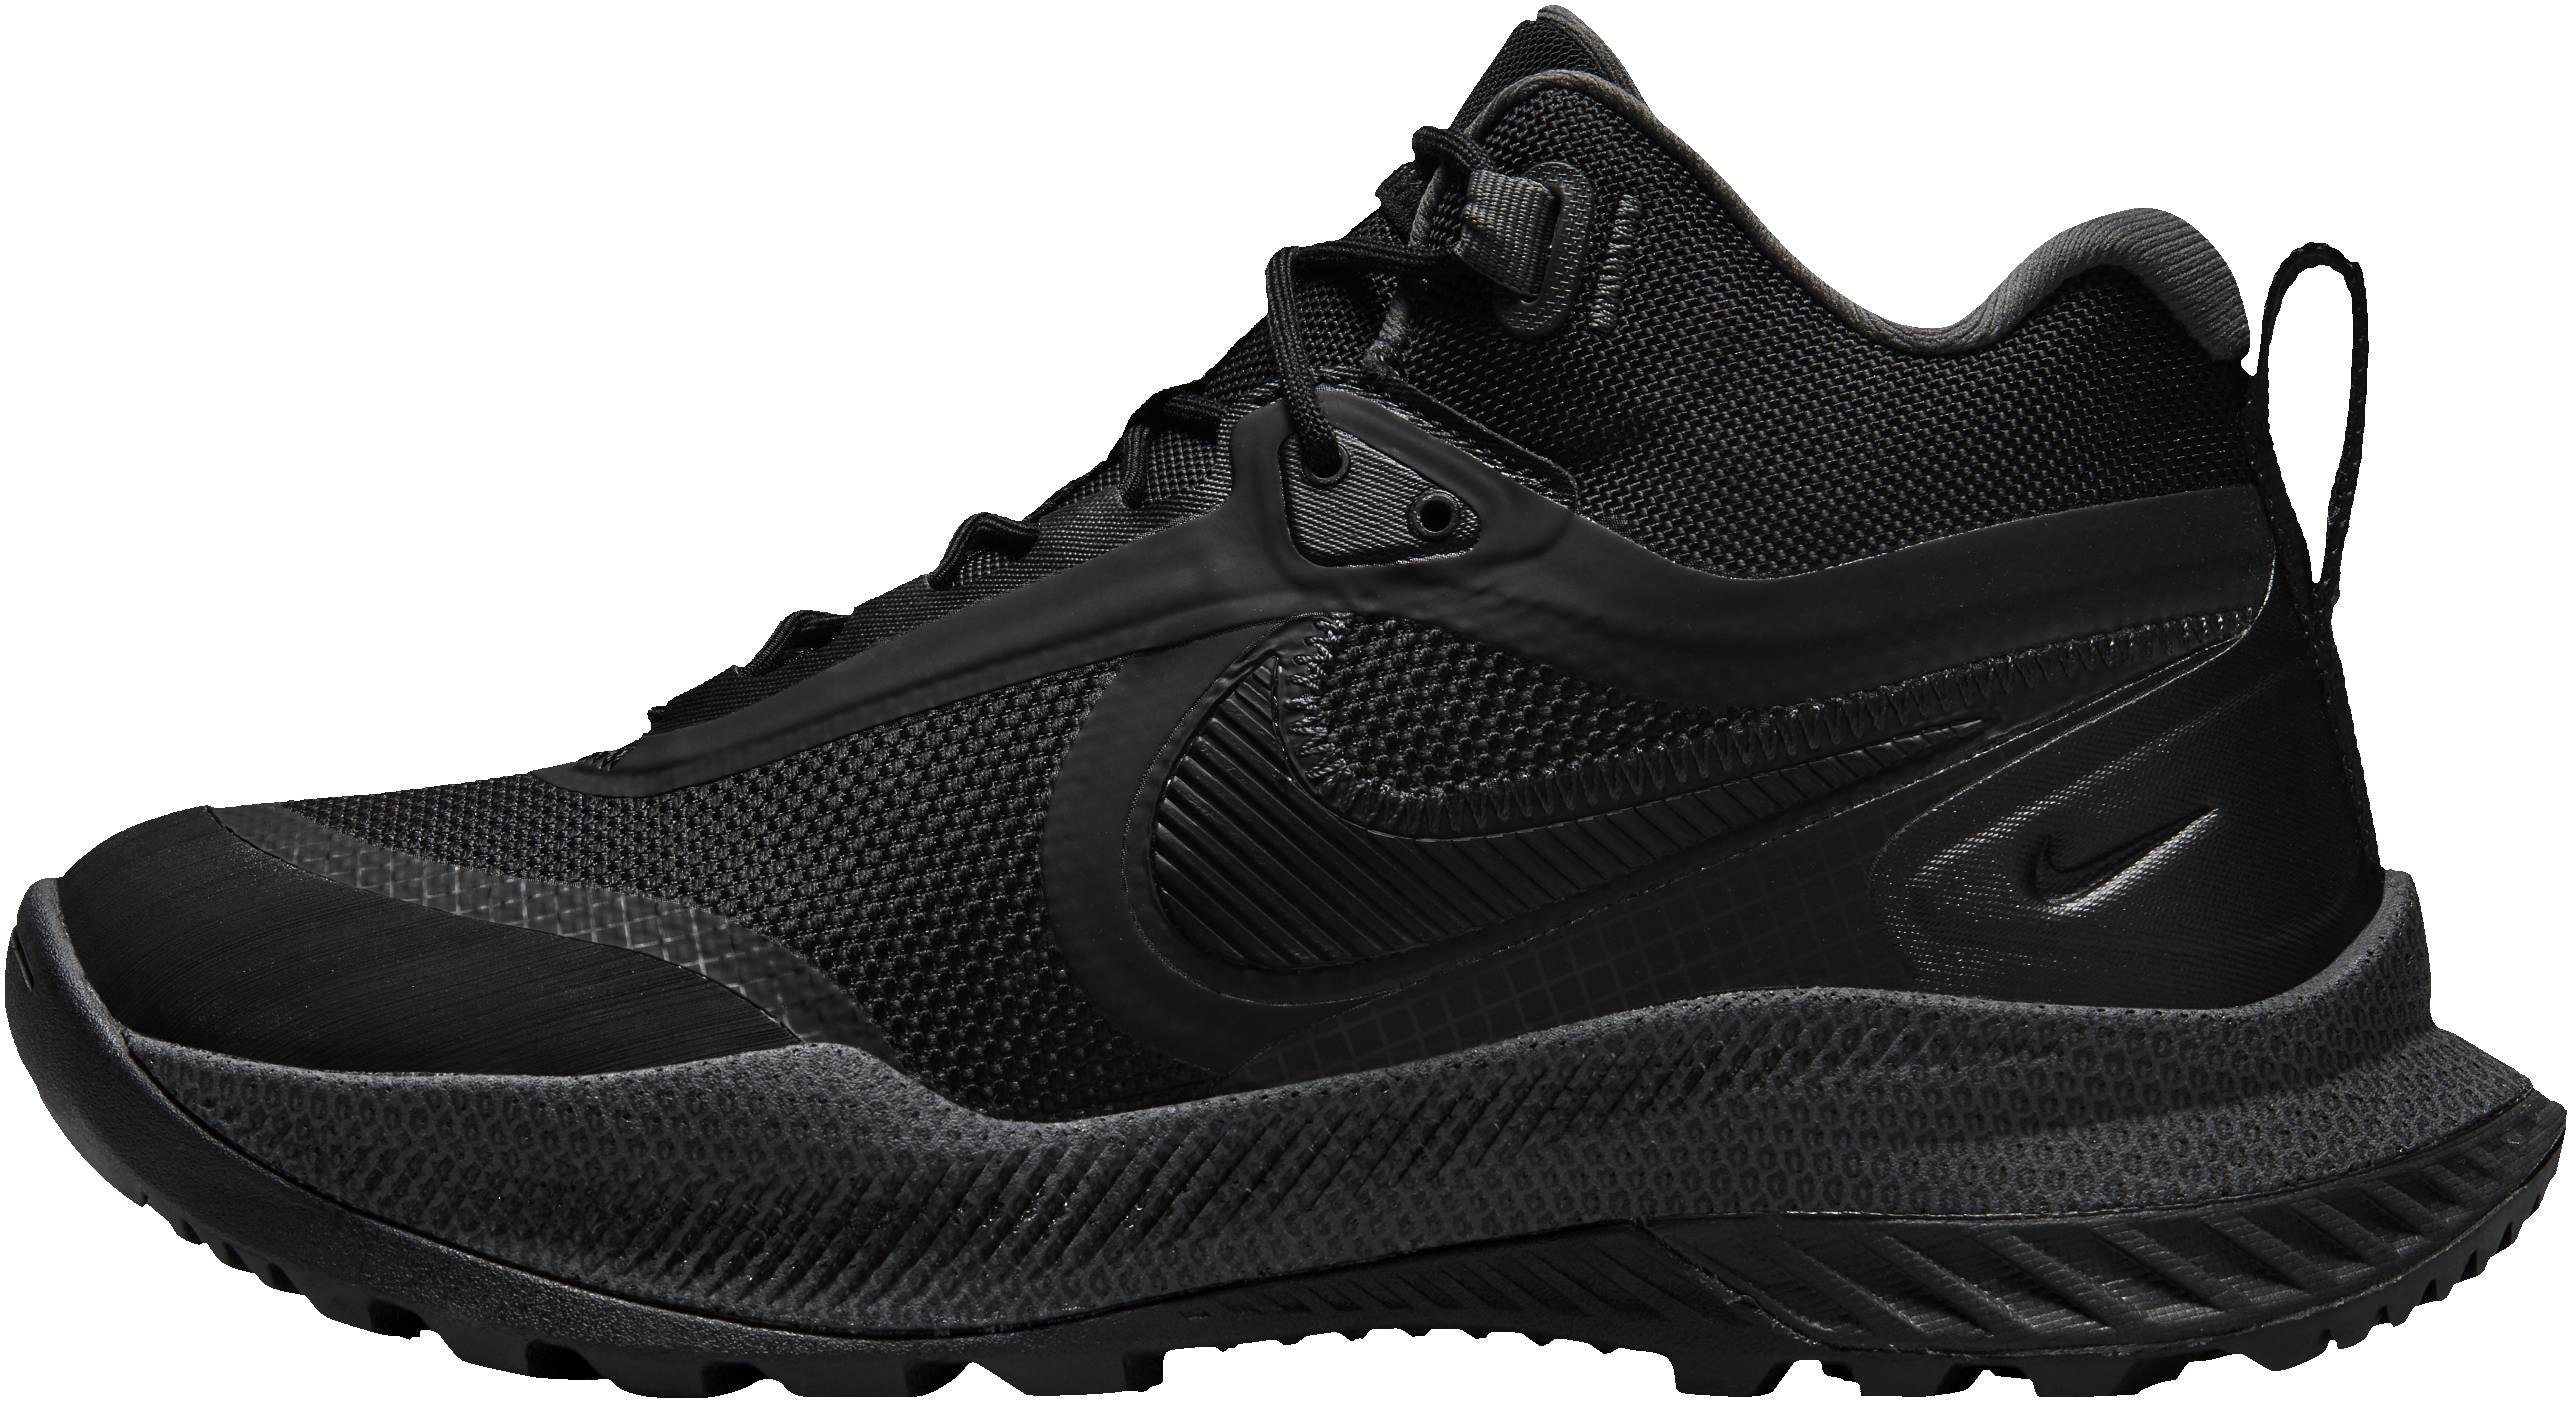 Nike React nike hiking shoes mens SFB Carbon sneakers in 4 colors | RunRepeat